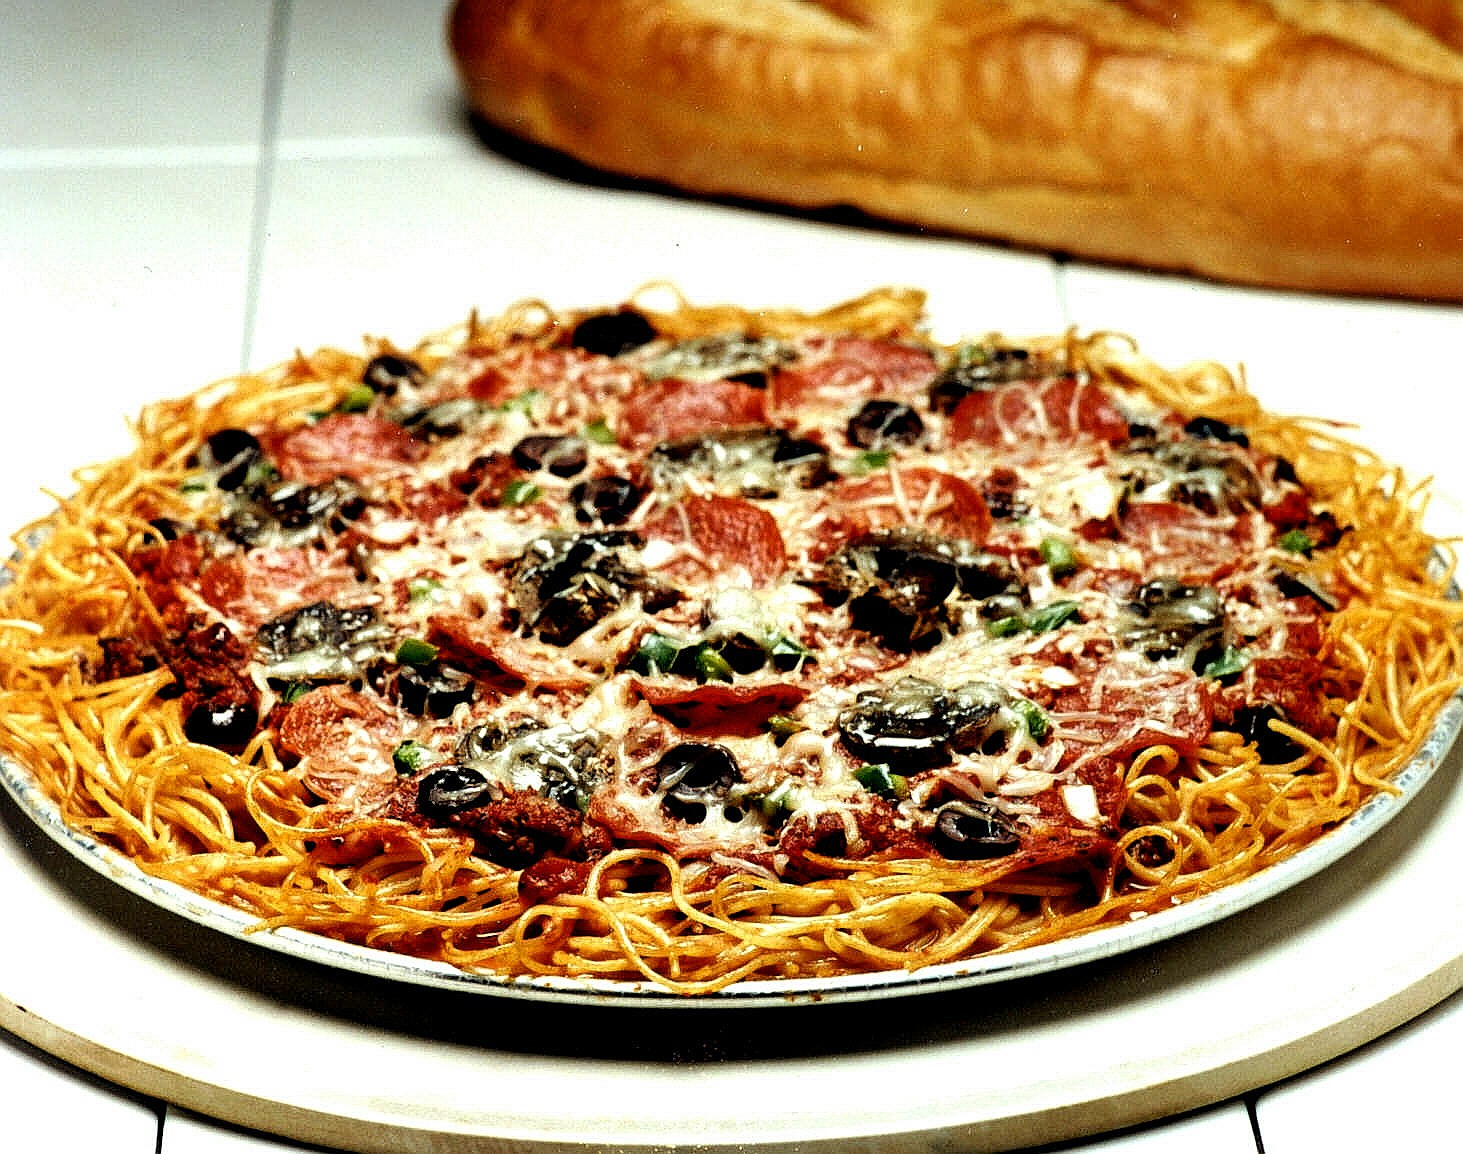 https://blogger.googleusercontent.com/img/b/R29vZ2xl/AVvXsEjcFz-VUAHcX2kwF_Wjh2Scgu-1uo5h4mGtIaQlaS1klDuHawiIQwusjosG8UPRfdiJkMsaE8FefvMeuS40NkAsROfO6lmMtoY3XUcNMRiZ7PZYCxjw4Qh52H0BqsjTReEENx4cPehiWEo/s1600/Spaghetti-Pizza-recipe.JPG